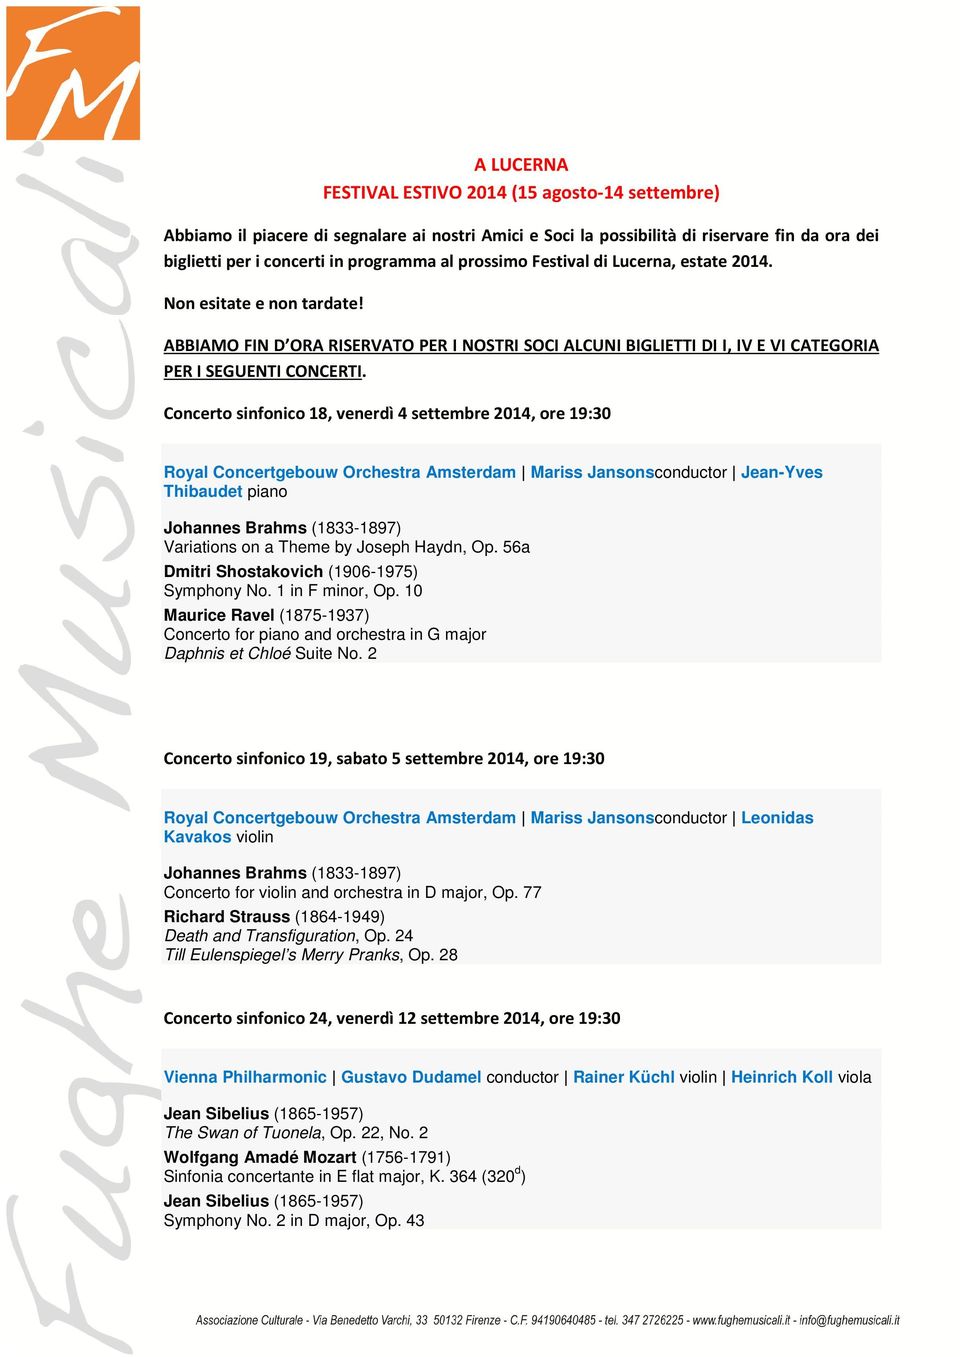 Concerto sinfonico 18, venerdì 4 settembre 2014, ore 19:30 Royal Concertgebouw Orchestra Amsterdam Mariss Jansonsconductor Jean-Yves Thibaudet piano Johannes Brahms (1833-1897) Variations on a Theme